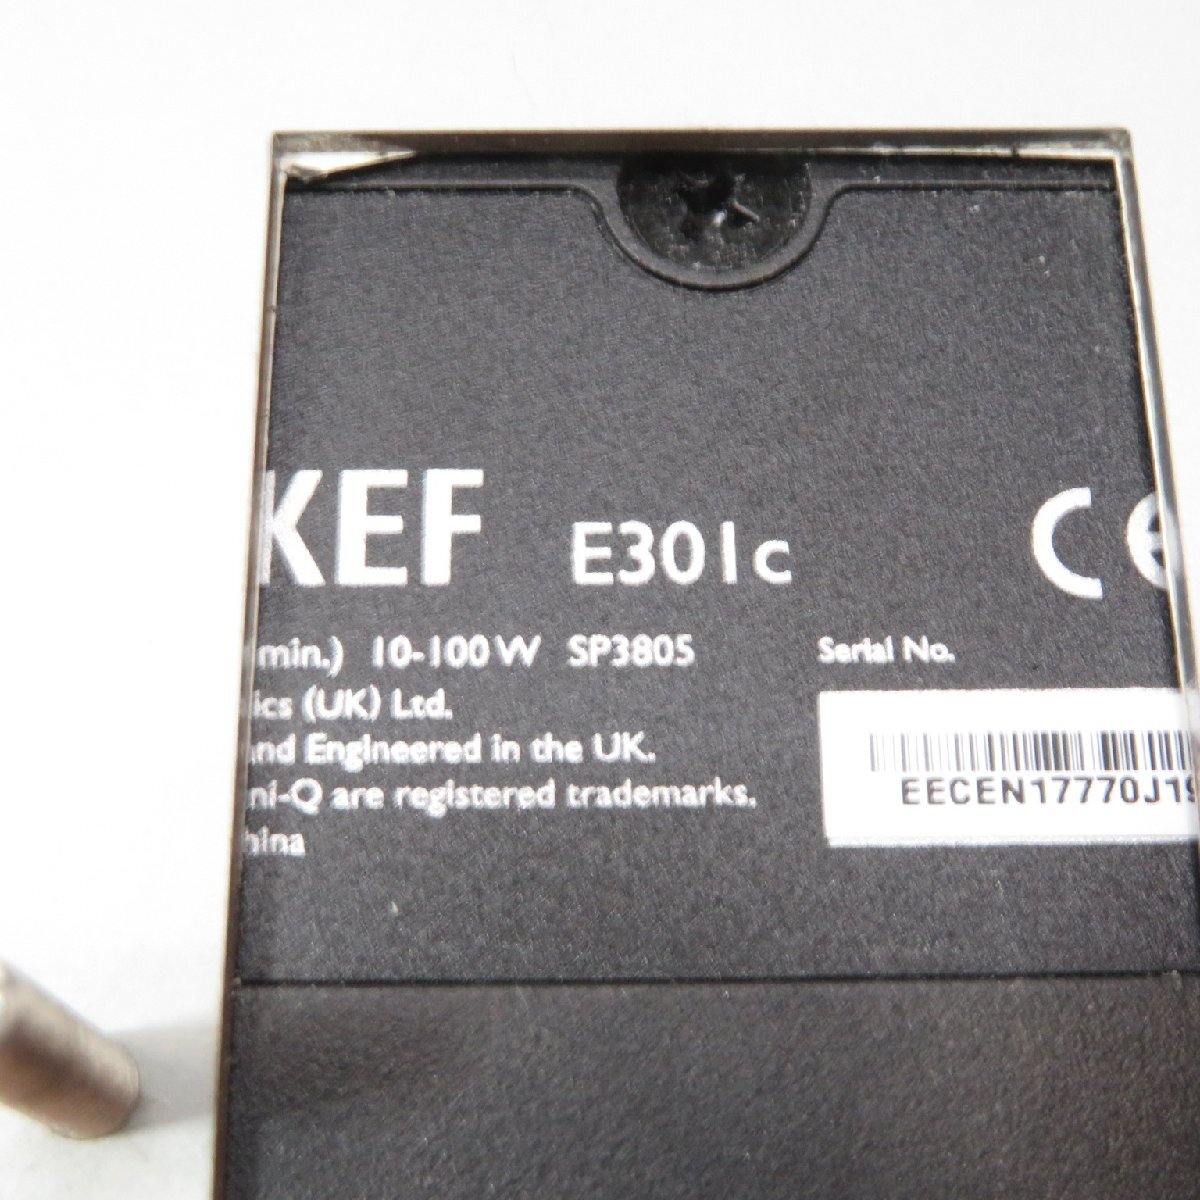 KEF ケフ E301c マイクスピーカー ホワイト 動作未確認 2ウェイバスレフ型 スピーカーシステム 音楽 OA機器 YH12415 中古オーディオ機器_画像9